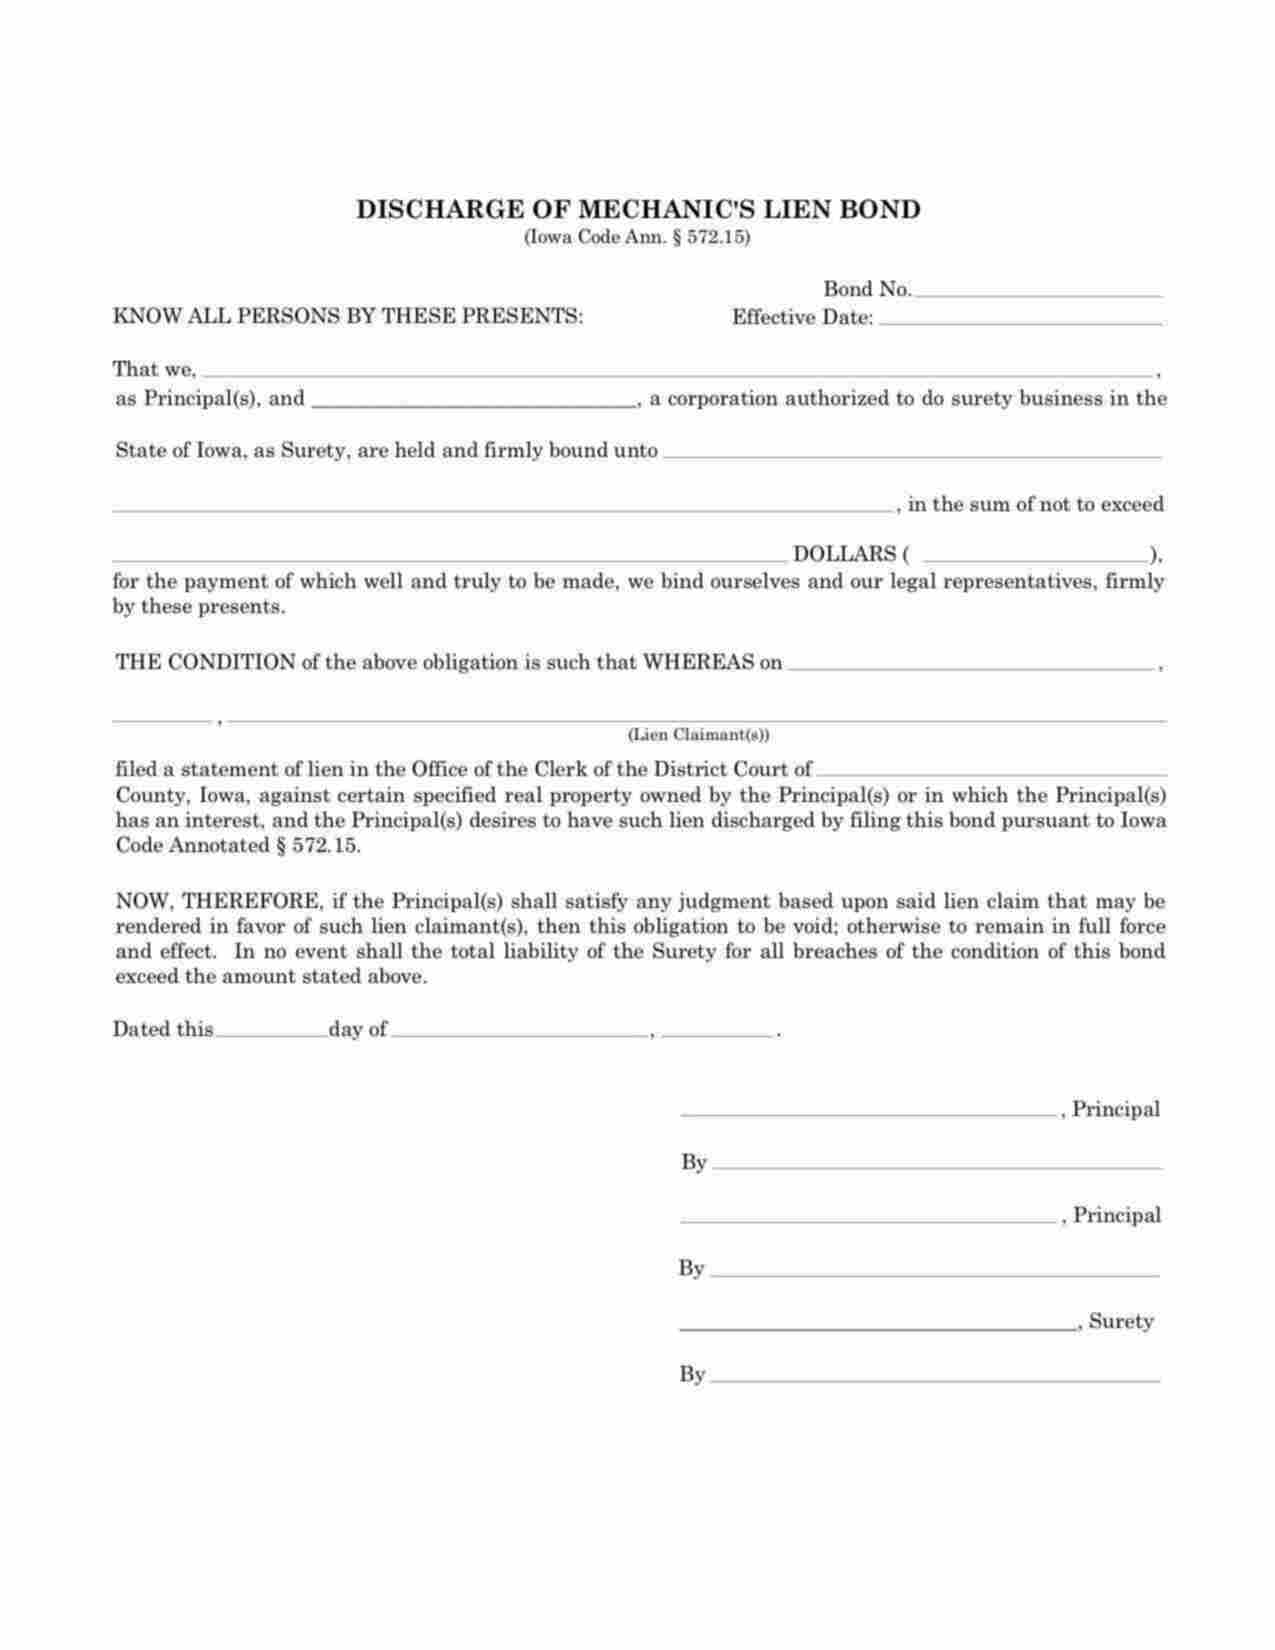 Iowa Discharge of Mechanics Lien Bond Form